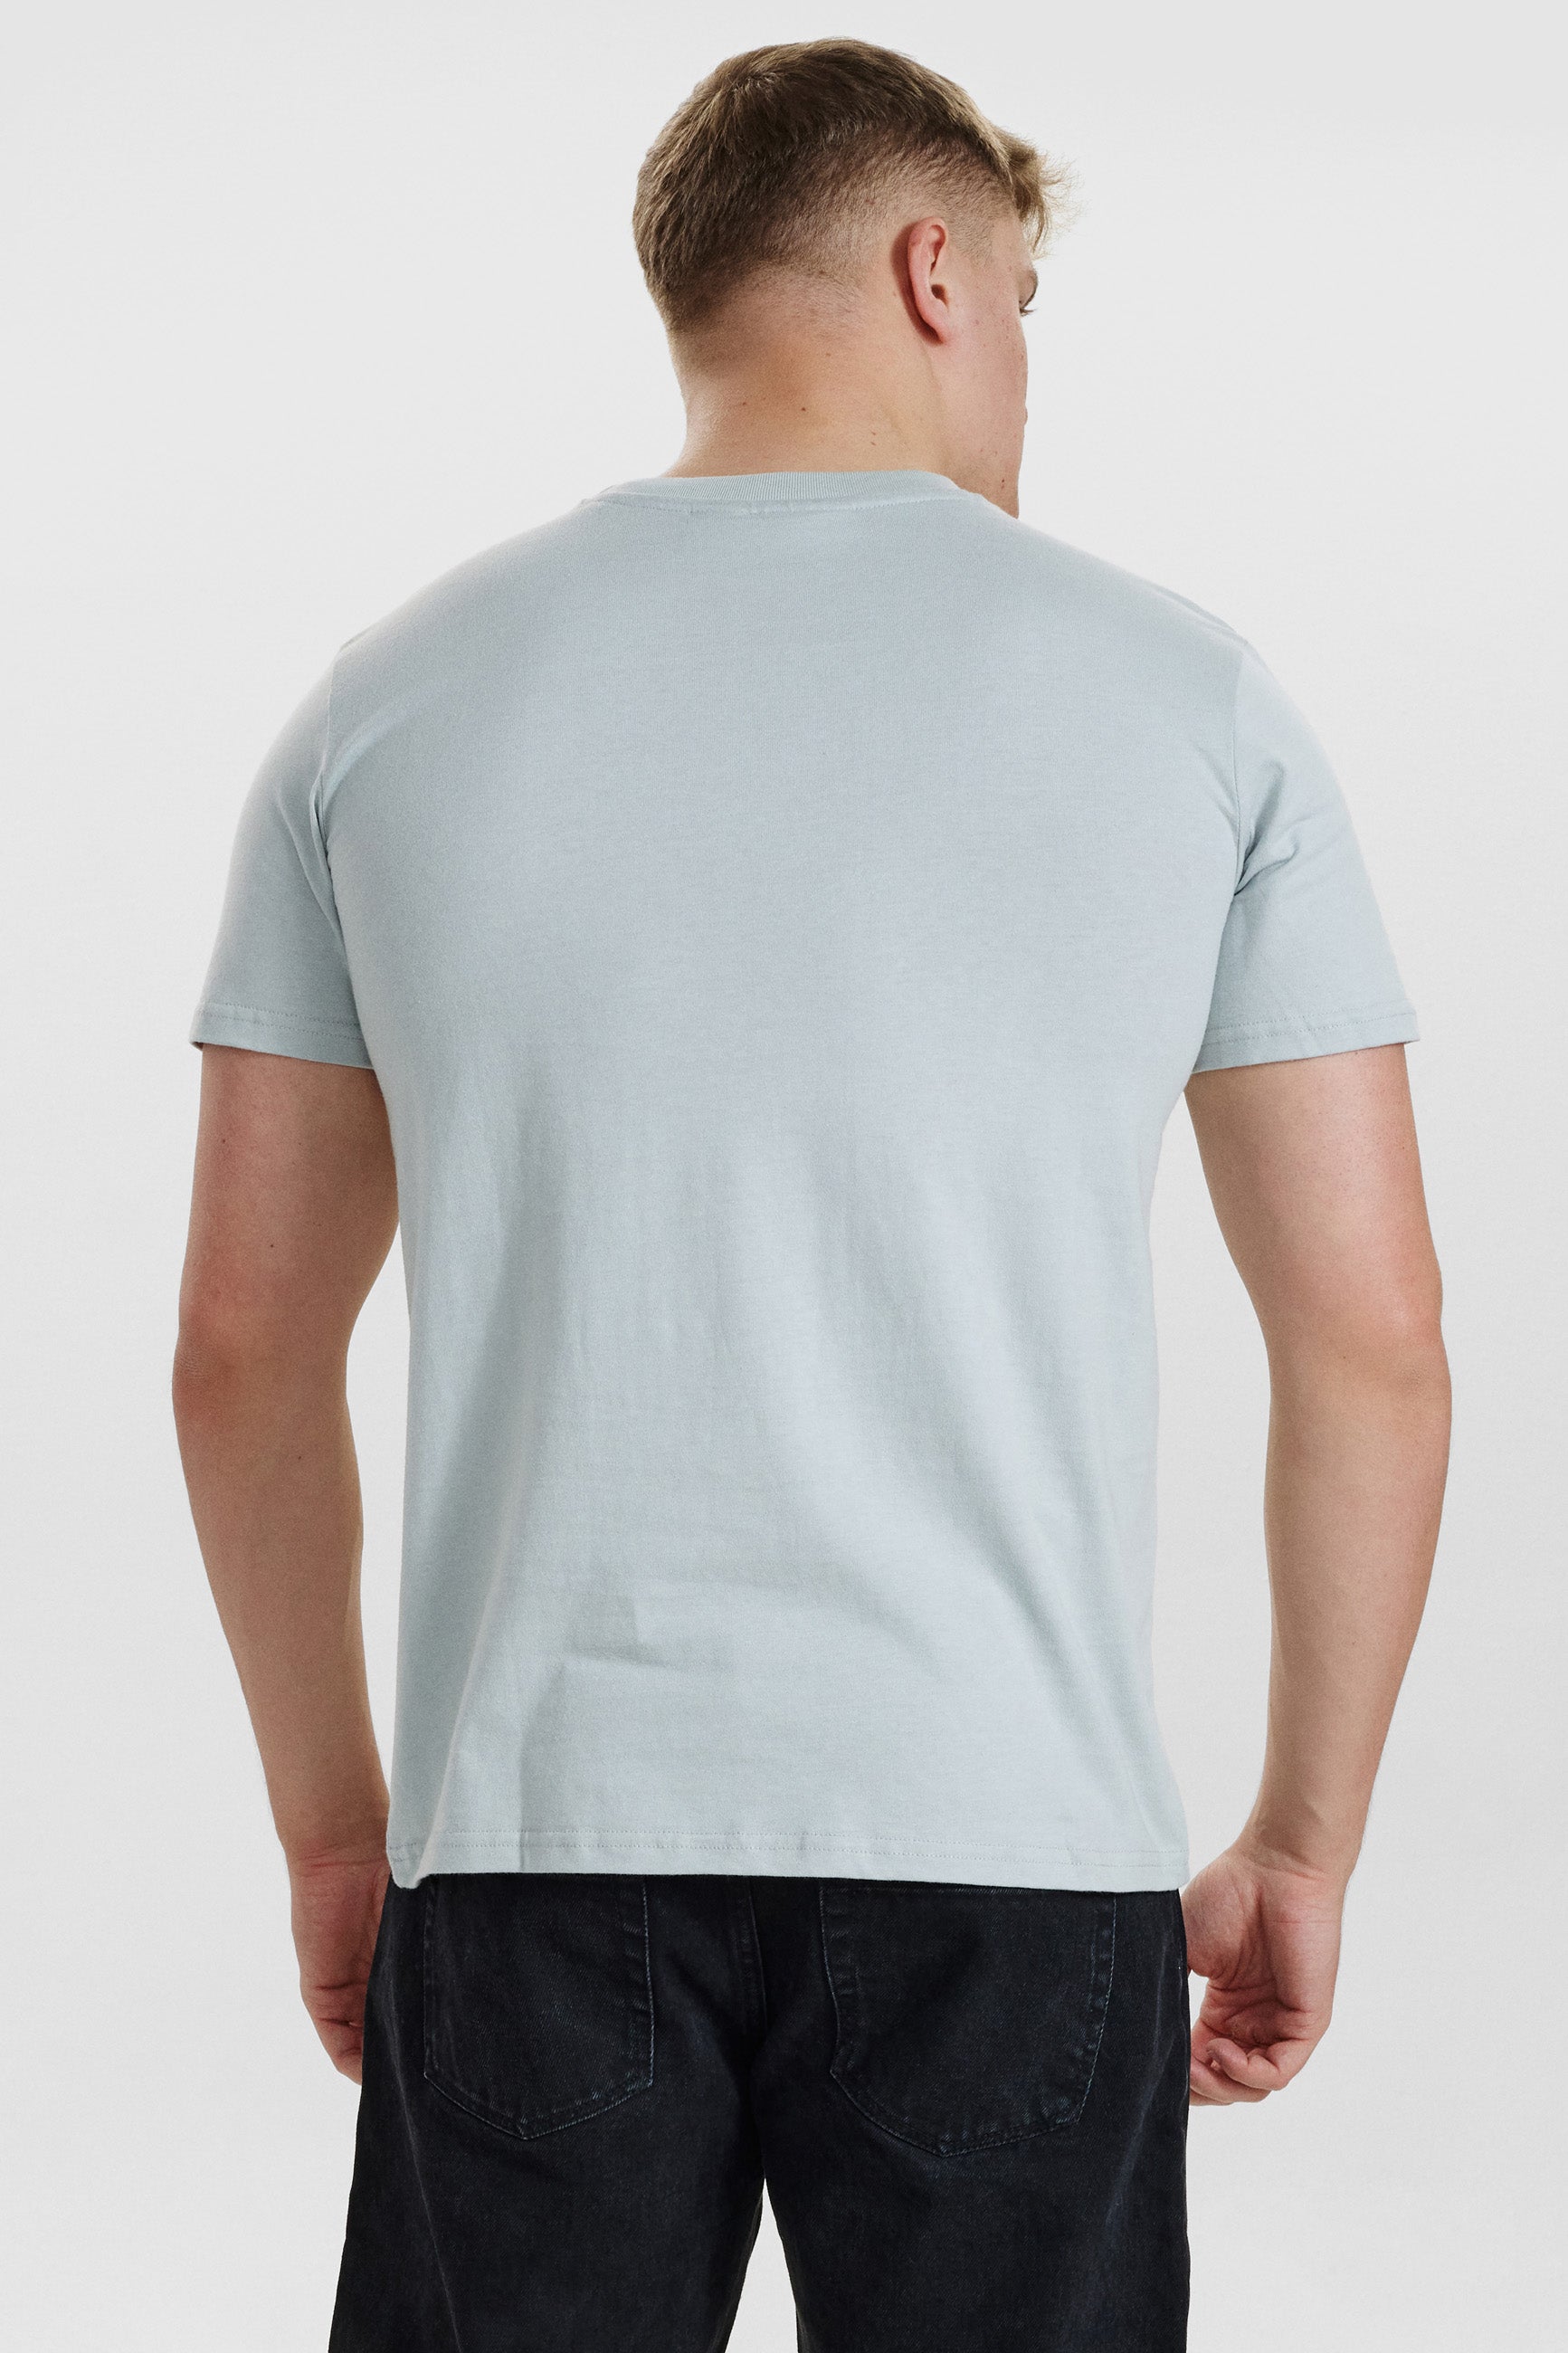 DXNMXRK. DX-Albert T-shirt Mirage Grey